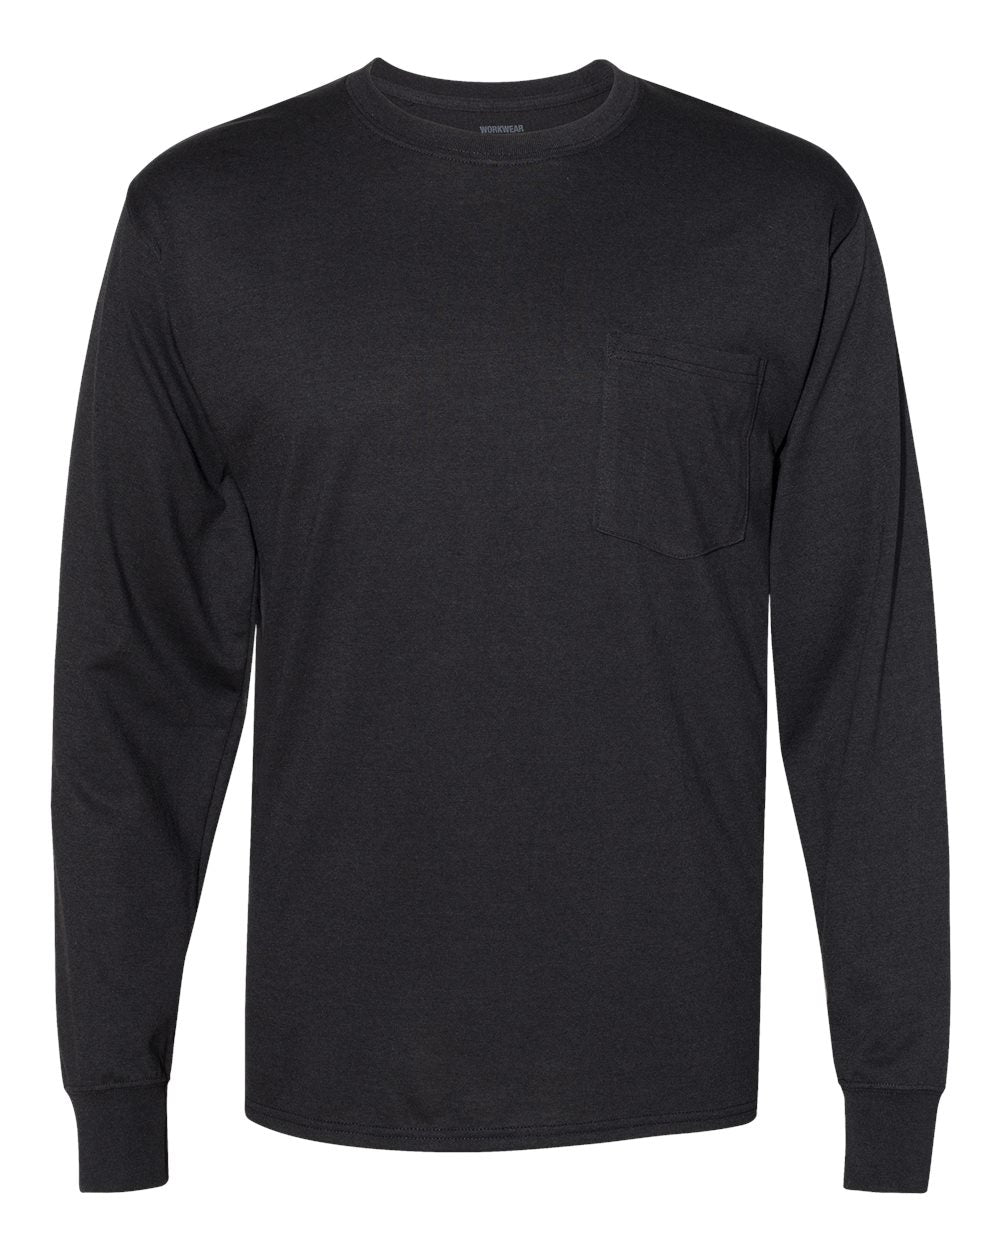 D4) W120 Hanes - Workwear Long Sleeve Pocket T-Shirt - ROCKZONE AMERICAS